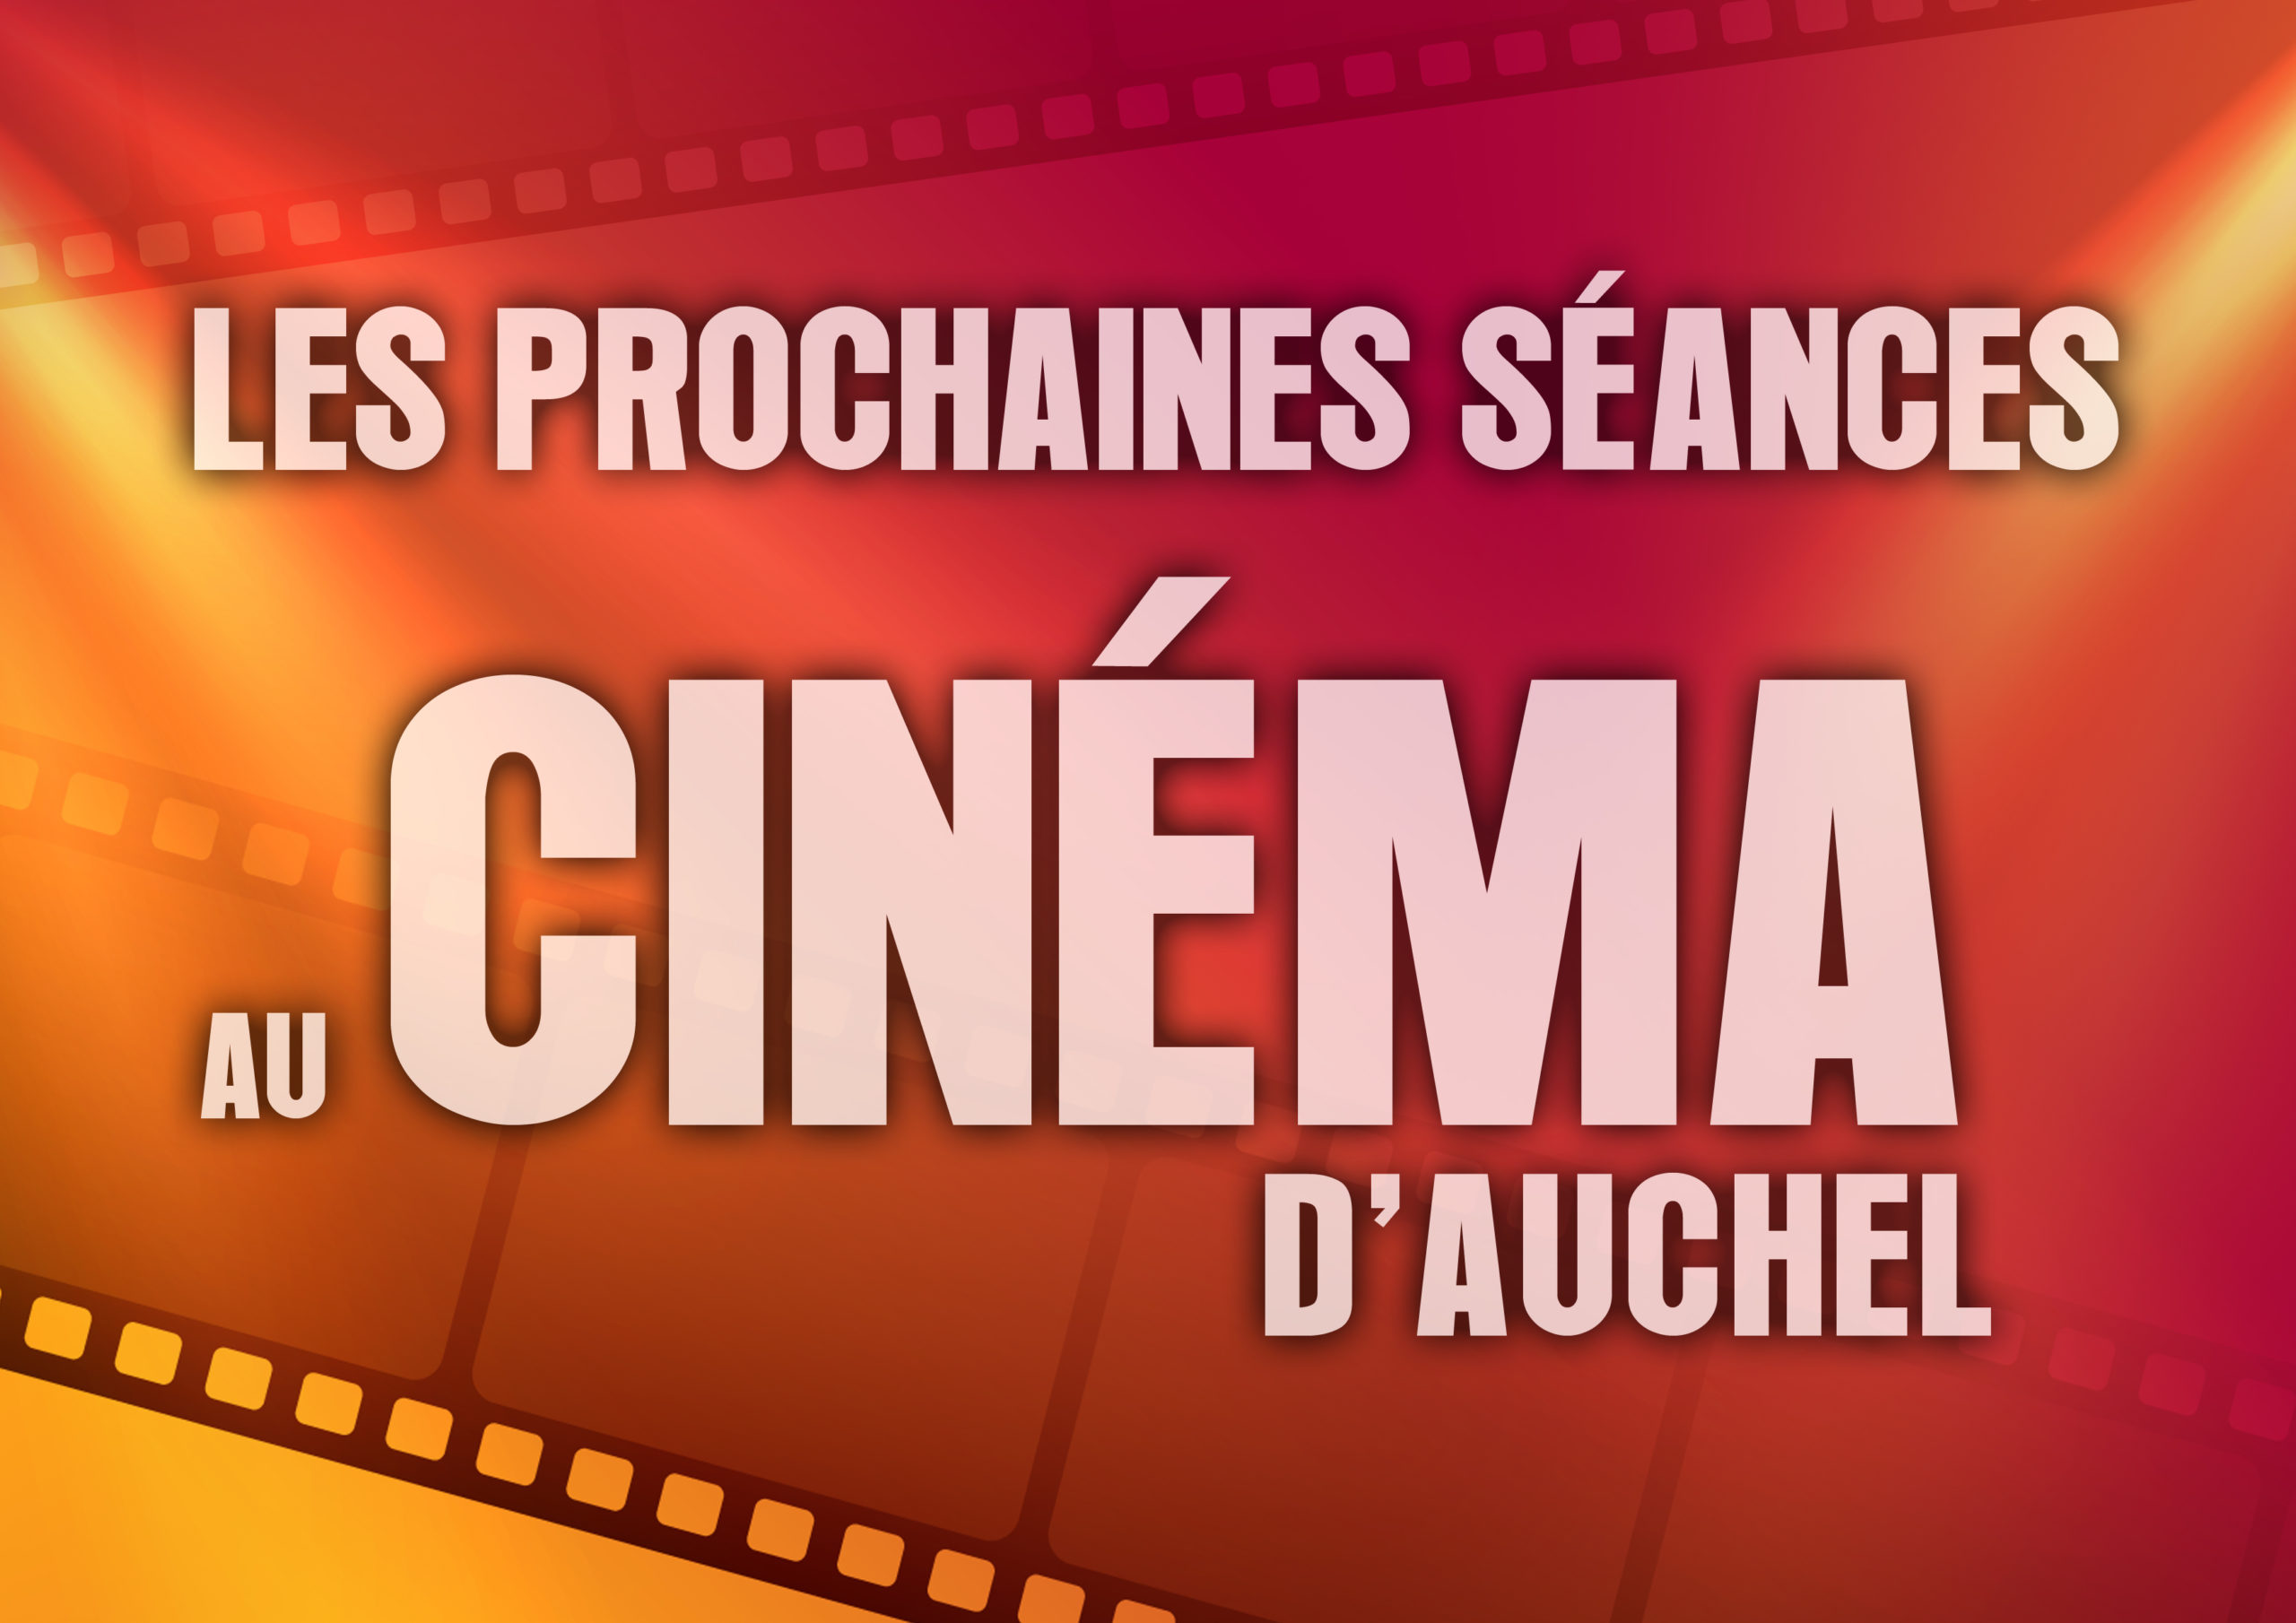 AU CINEMA D’AUCHEL CE WEEK-END